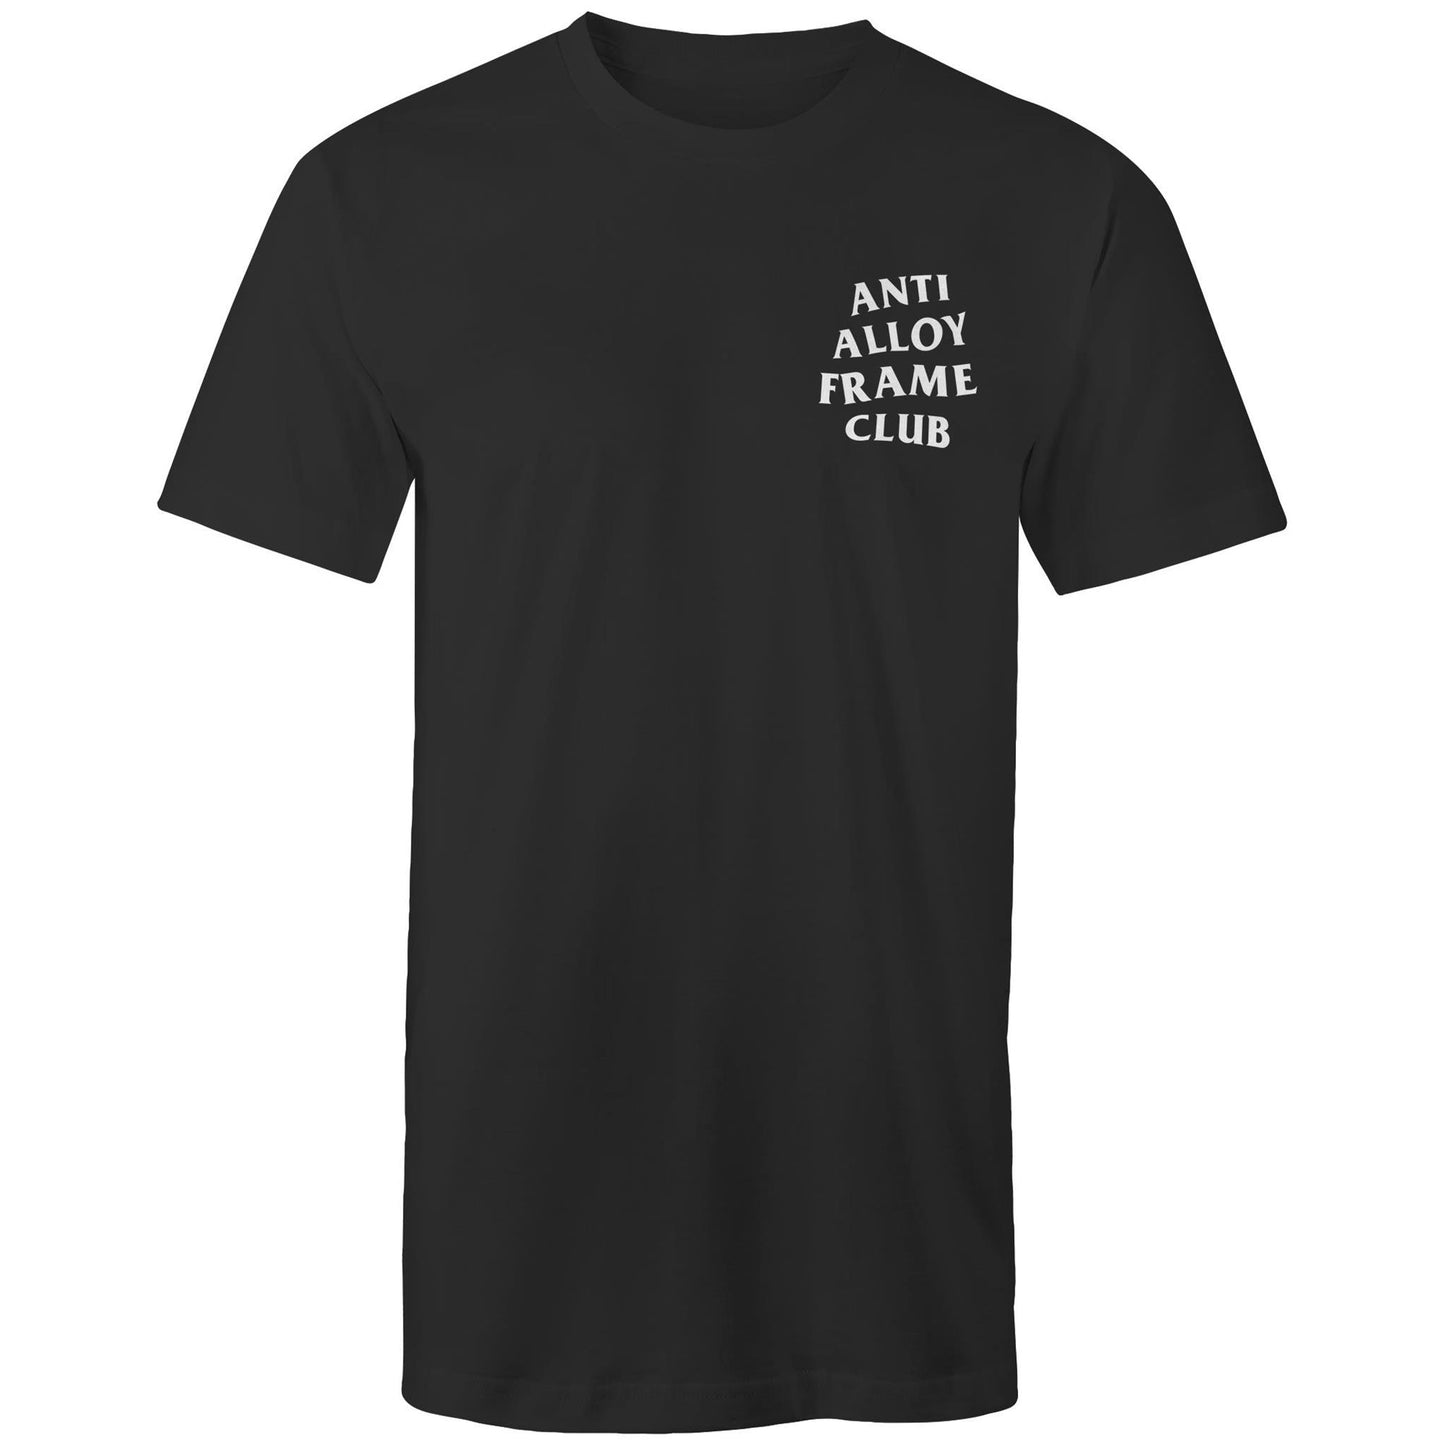 Anti Alloy Frame Club - Tall Tee